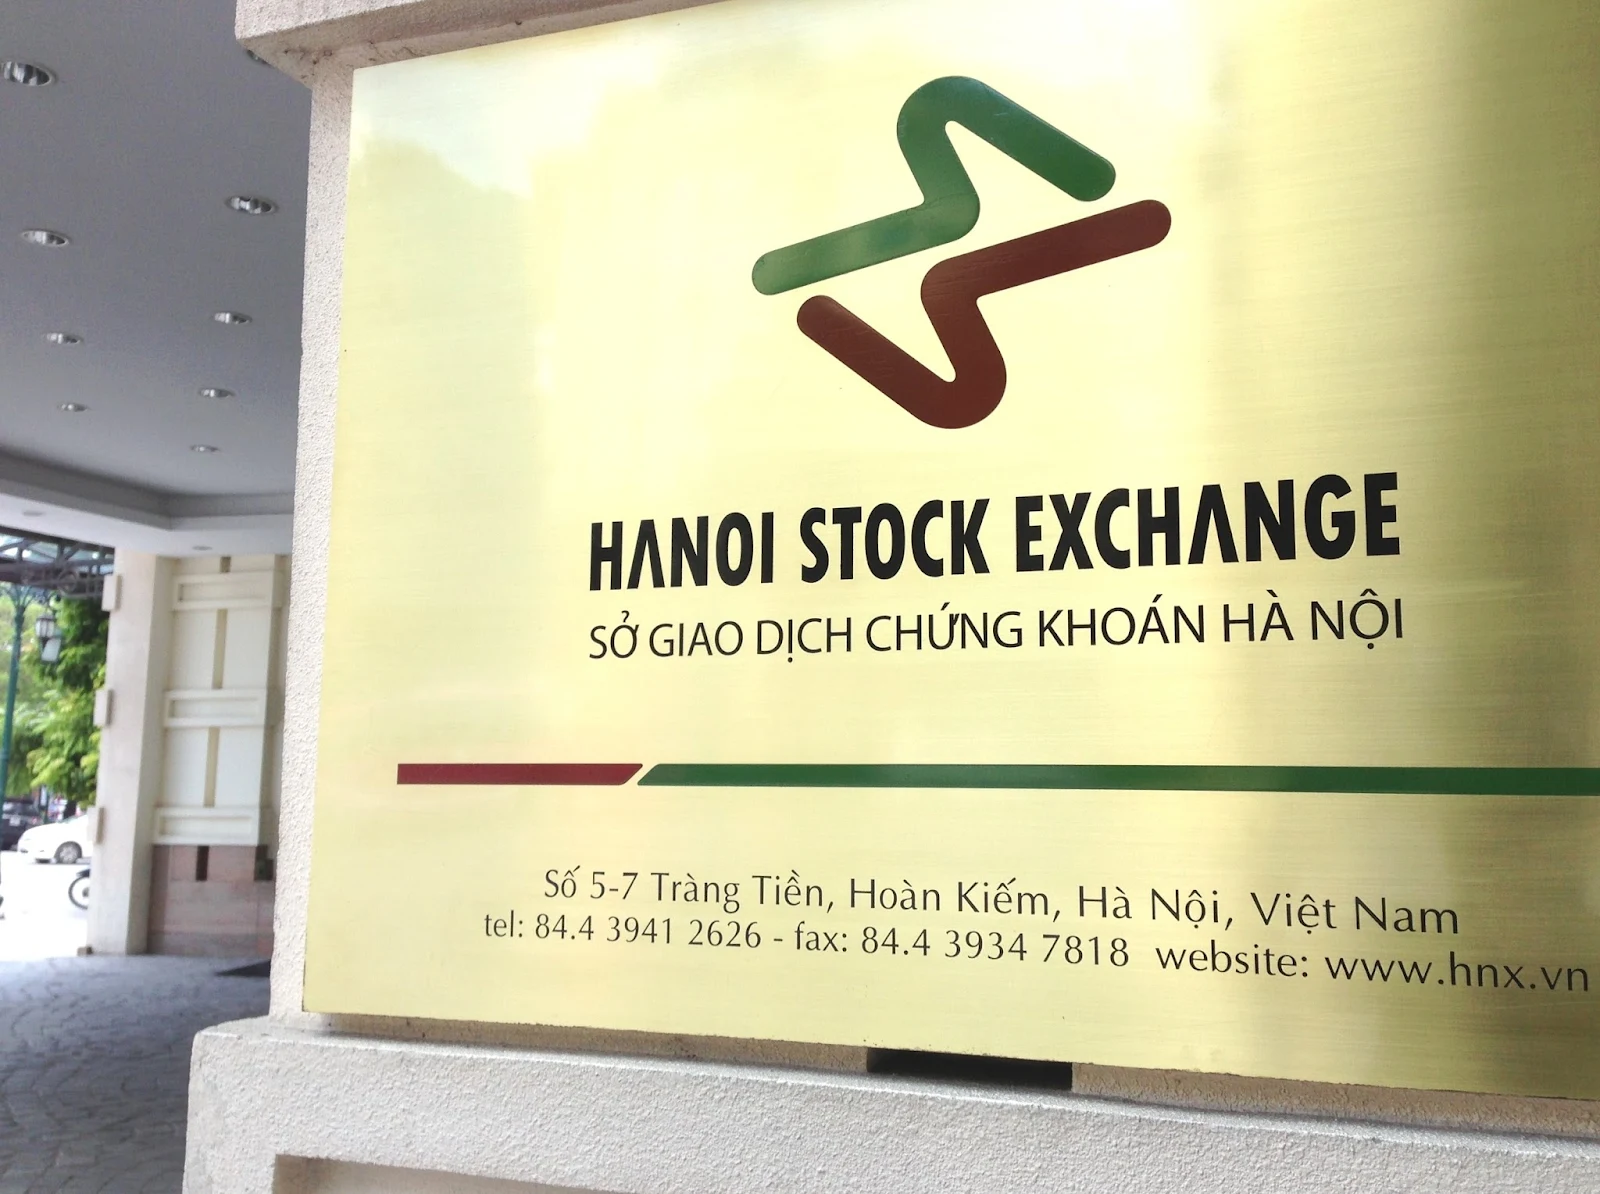 hanoi-stock-exchange ハノイ証券取引所